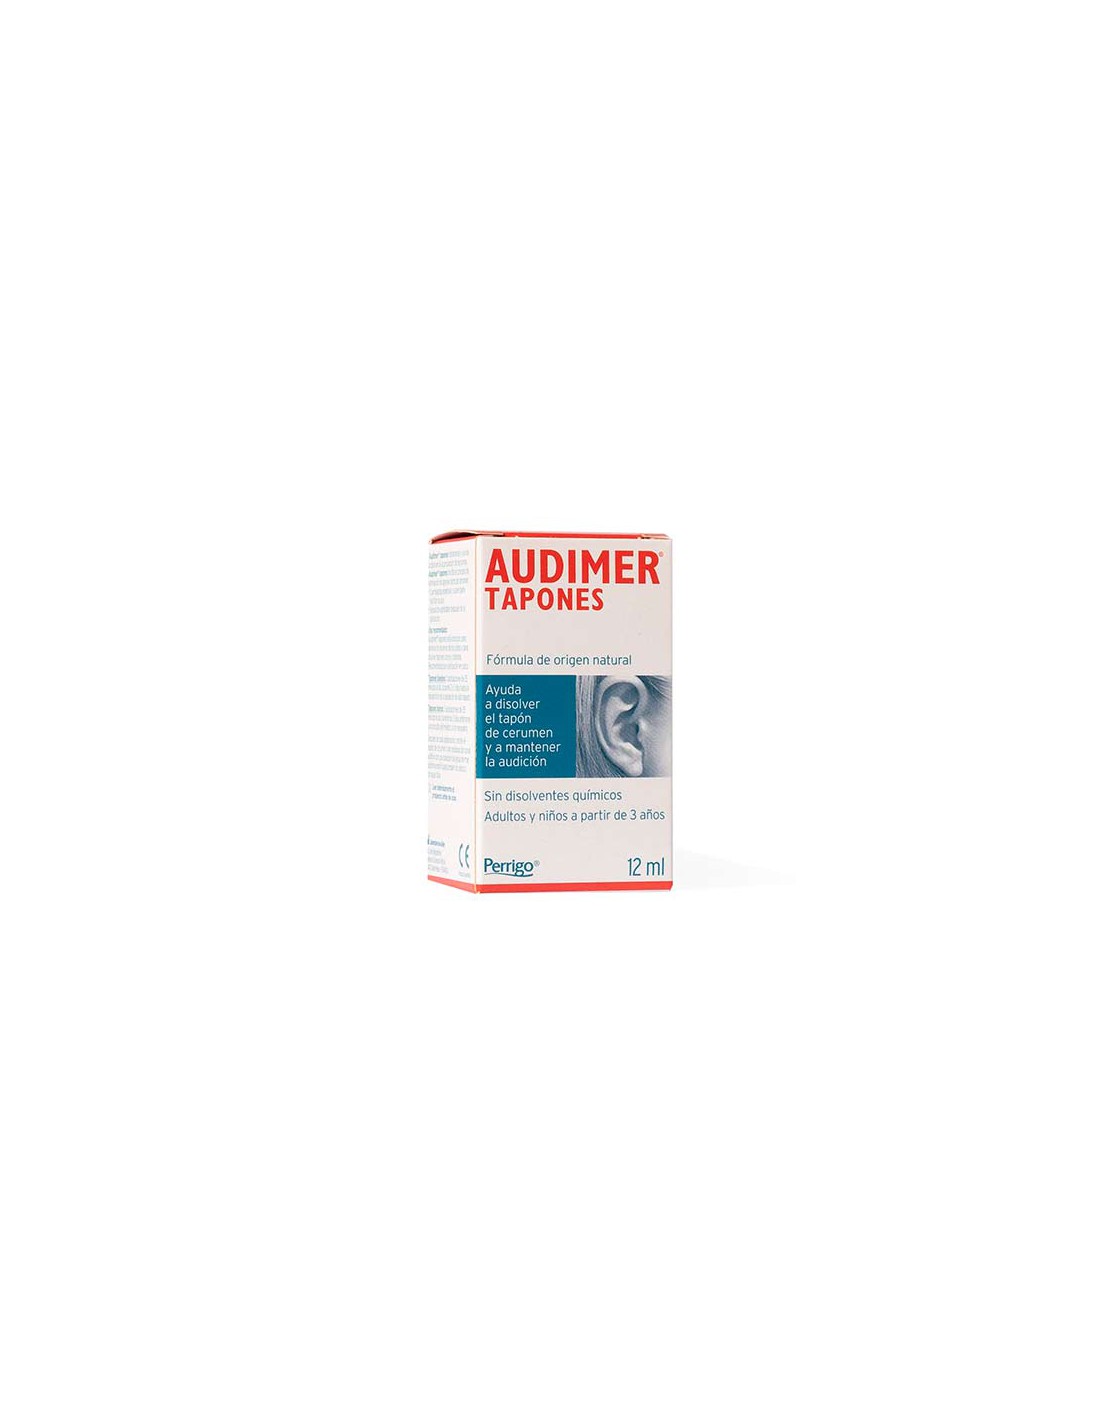 Audimer Audiclean Solución Limpieza Oídos, 60 ml